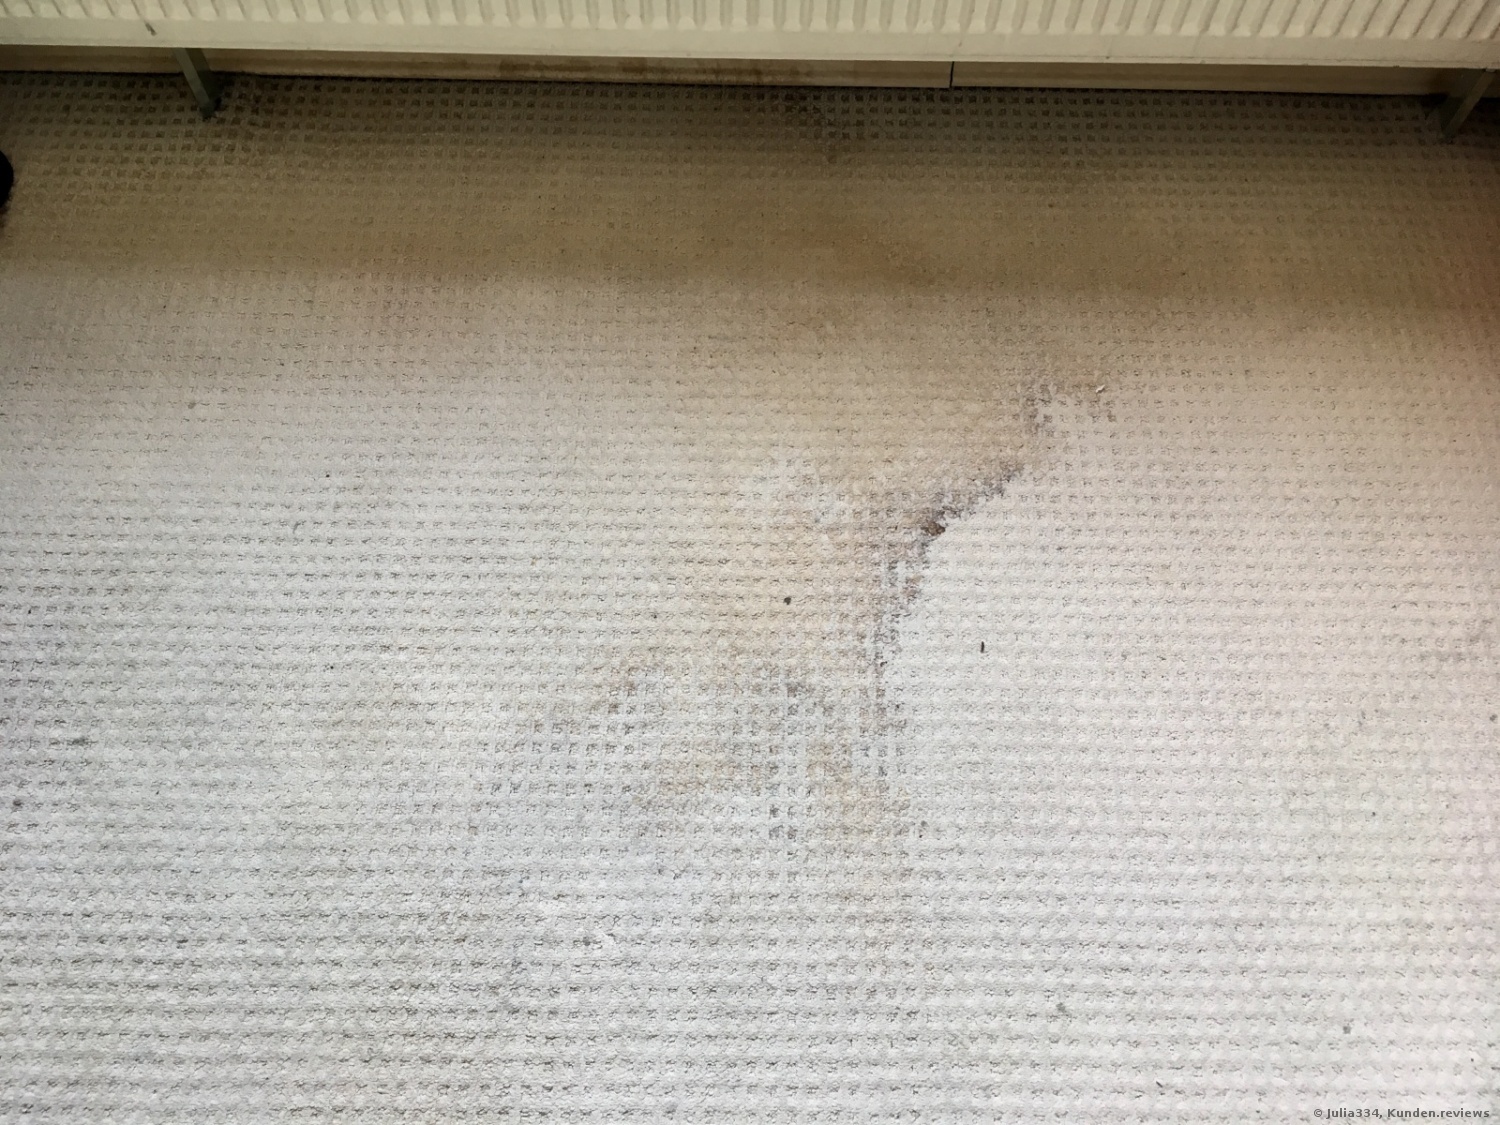 Dr. Beckmann Carpet Stain Remover With Cleaning Applicator/Brush  Reinigungsmittel Foto